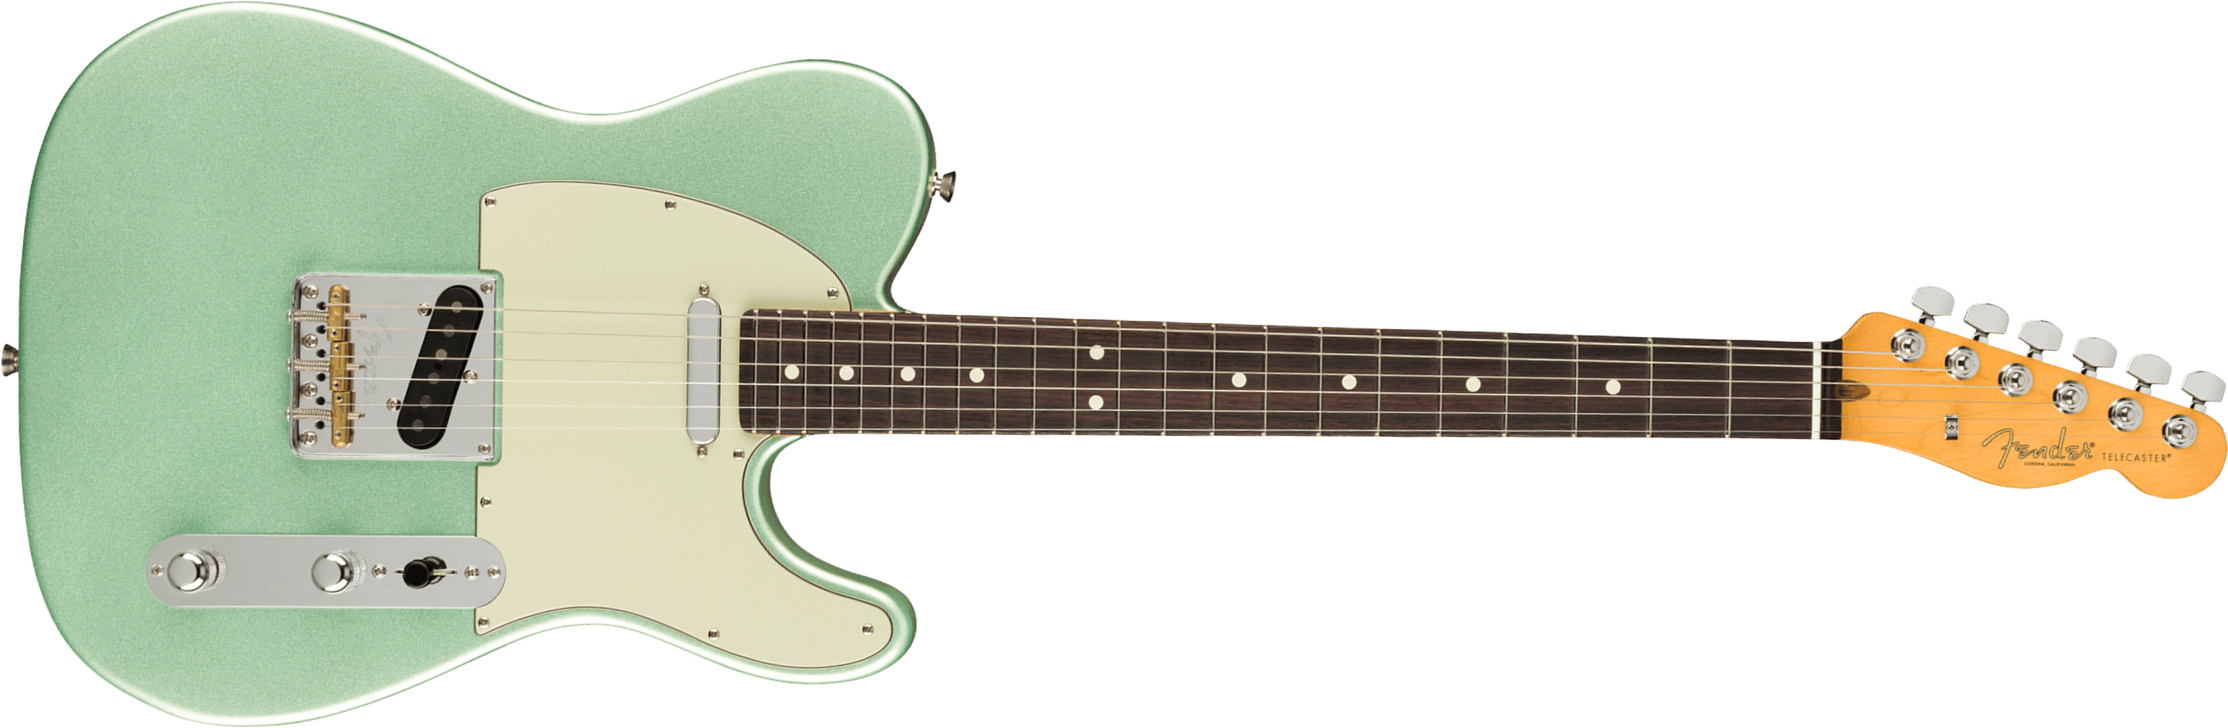 Fender Tele American Professional Ii Usa Rw - Mystic Surf Green - Guitarra eléctrica con forma de tel - Main picture